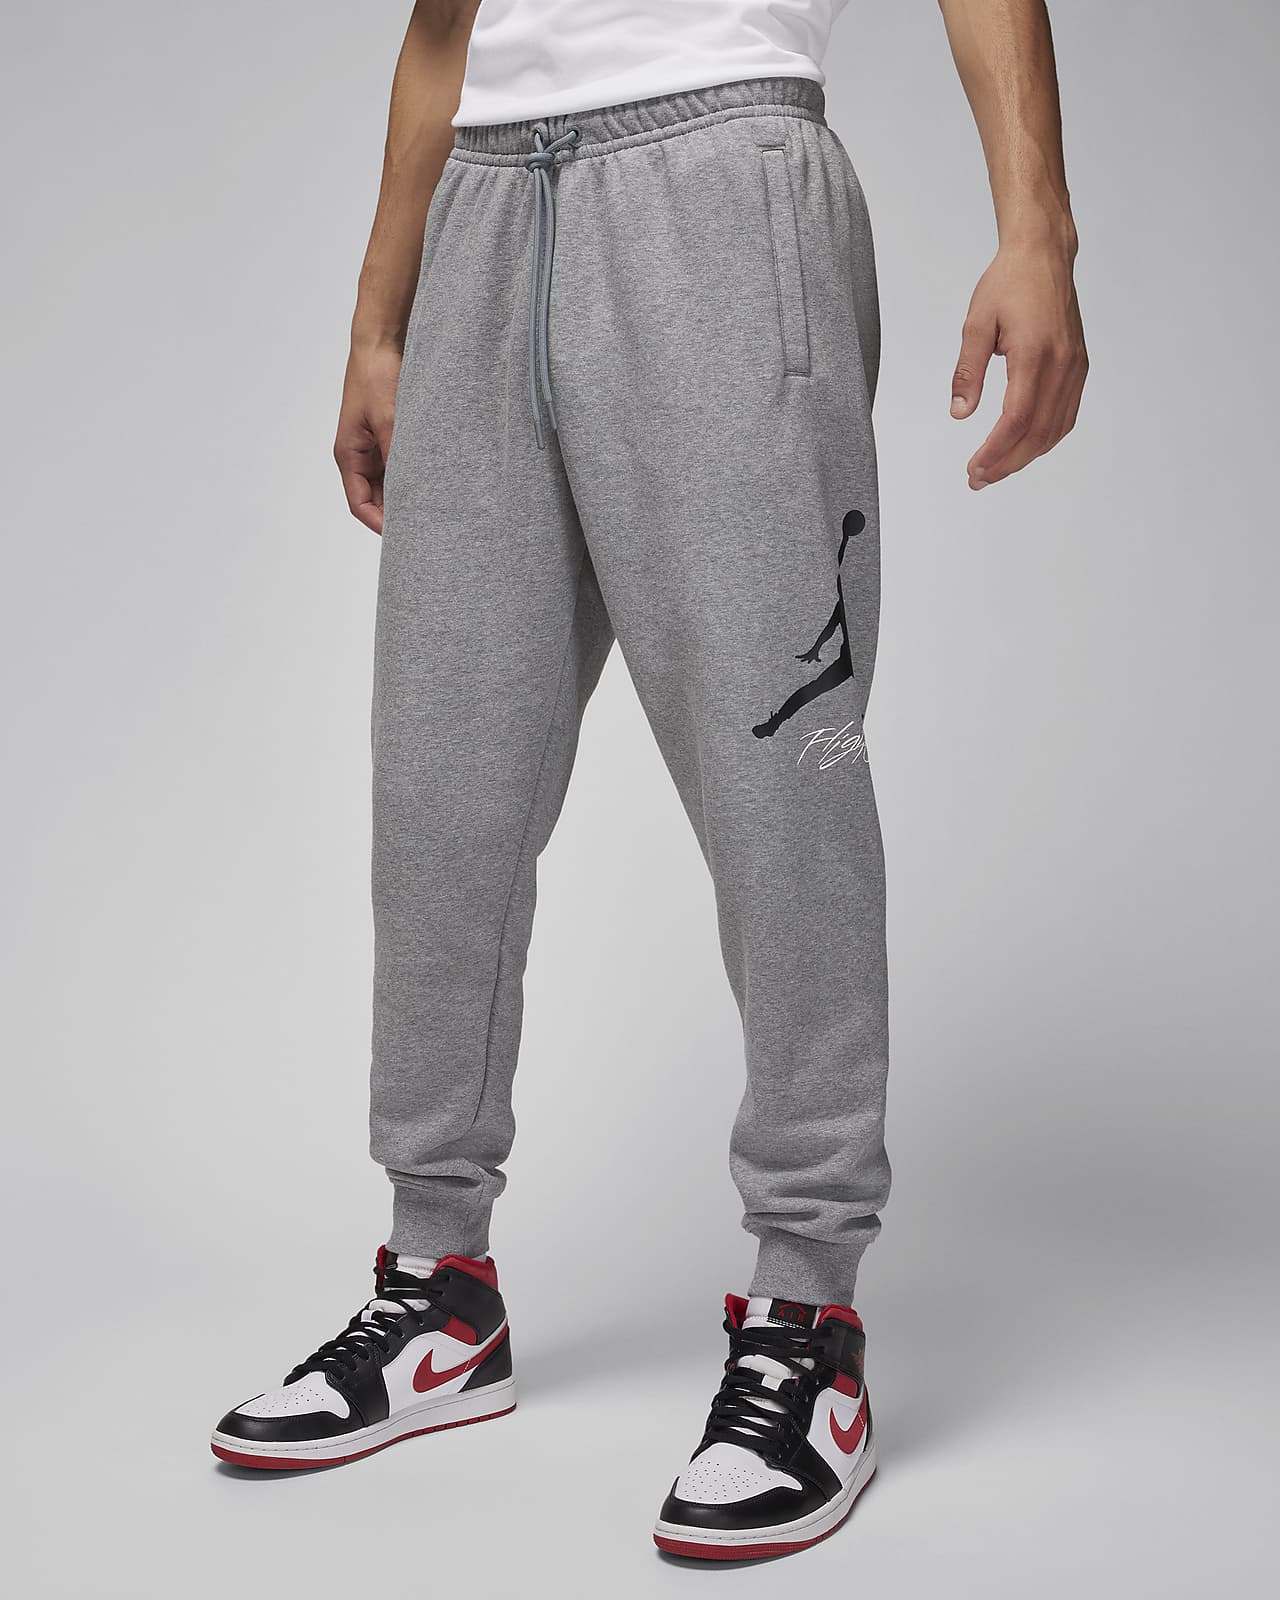 Jordan Essentials Men's Fleece Baseline Trousers